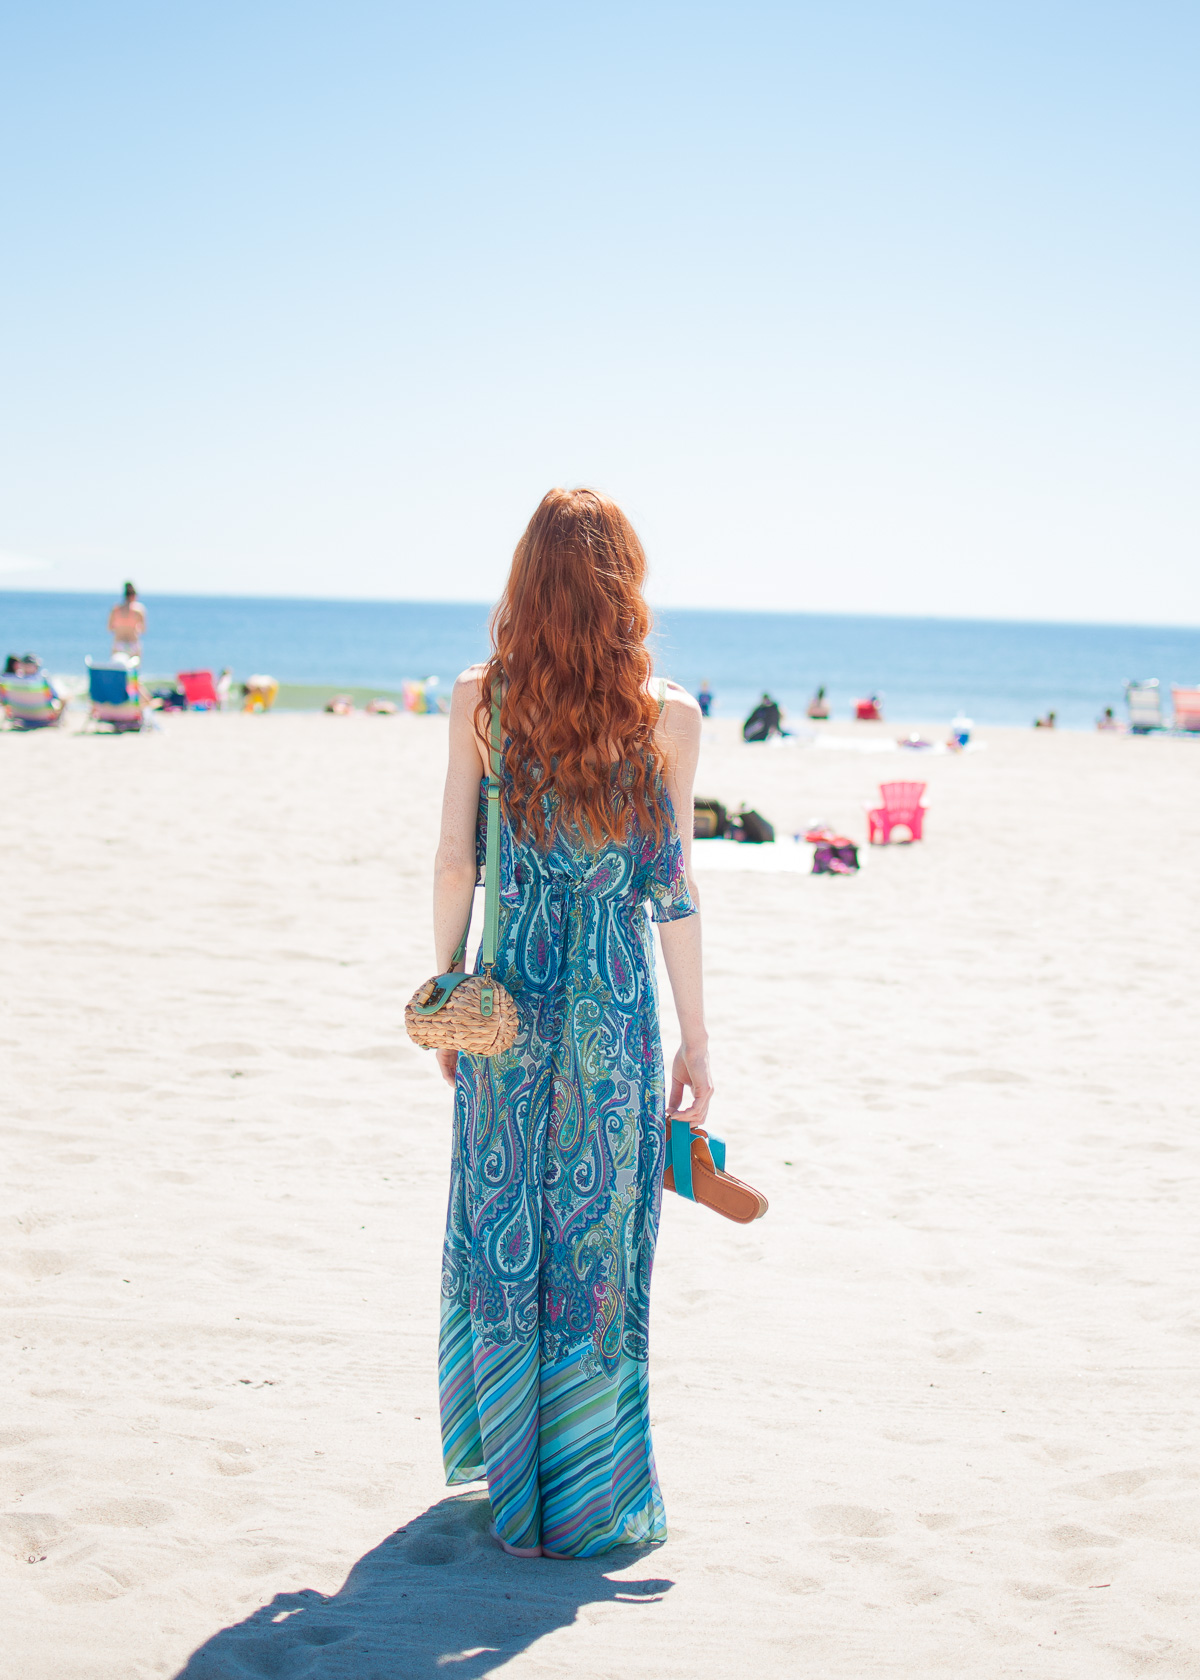 Into the Blue summer maxi dress at Hampton Beach 